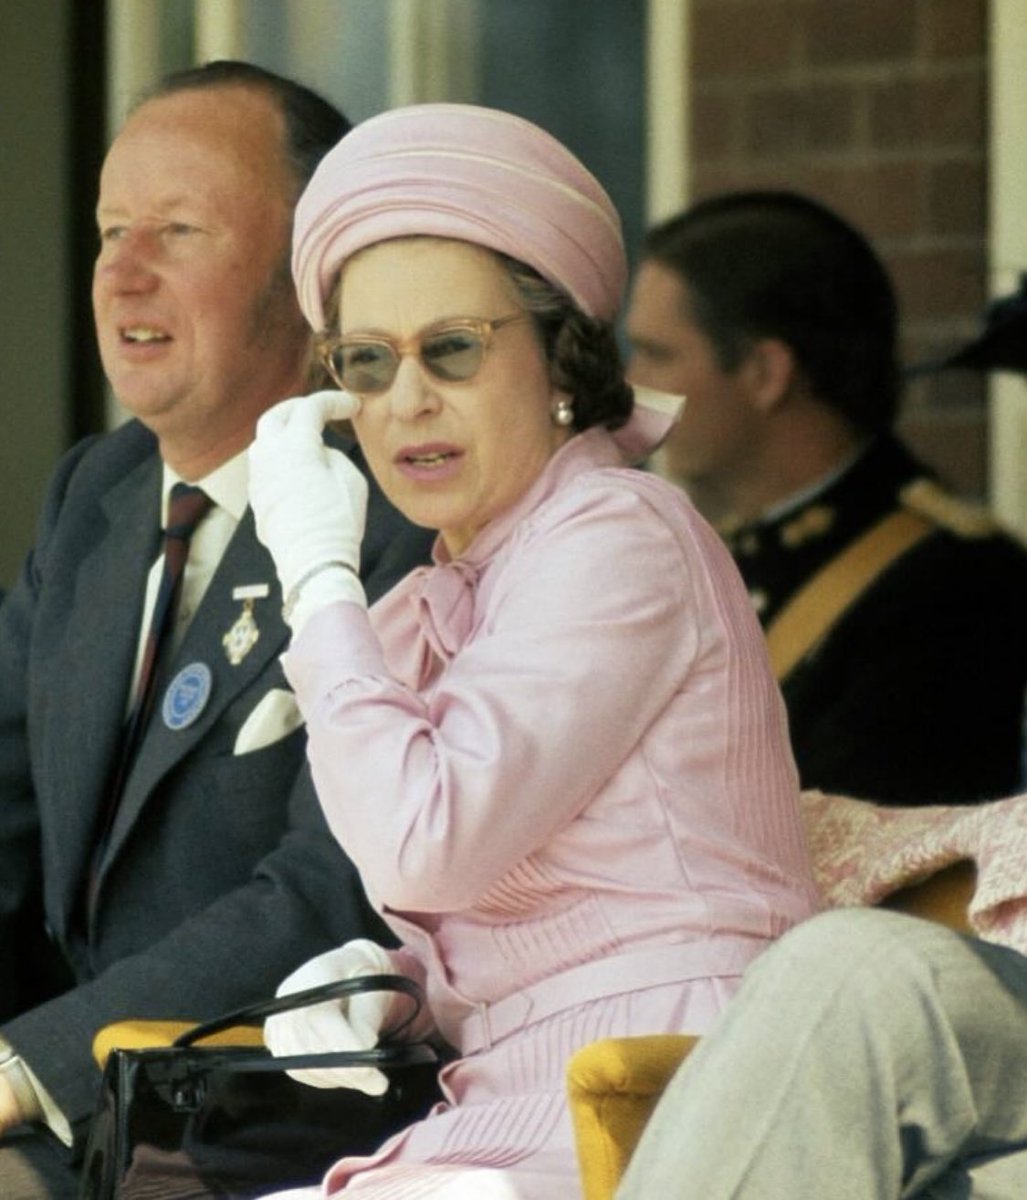 Queen Elizabeth II at the Centenary West Mid Agricultural Show in Shrewsbury, 1975. 

#QueenElizabethII